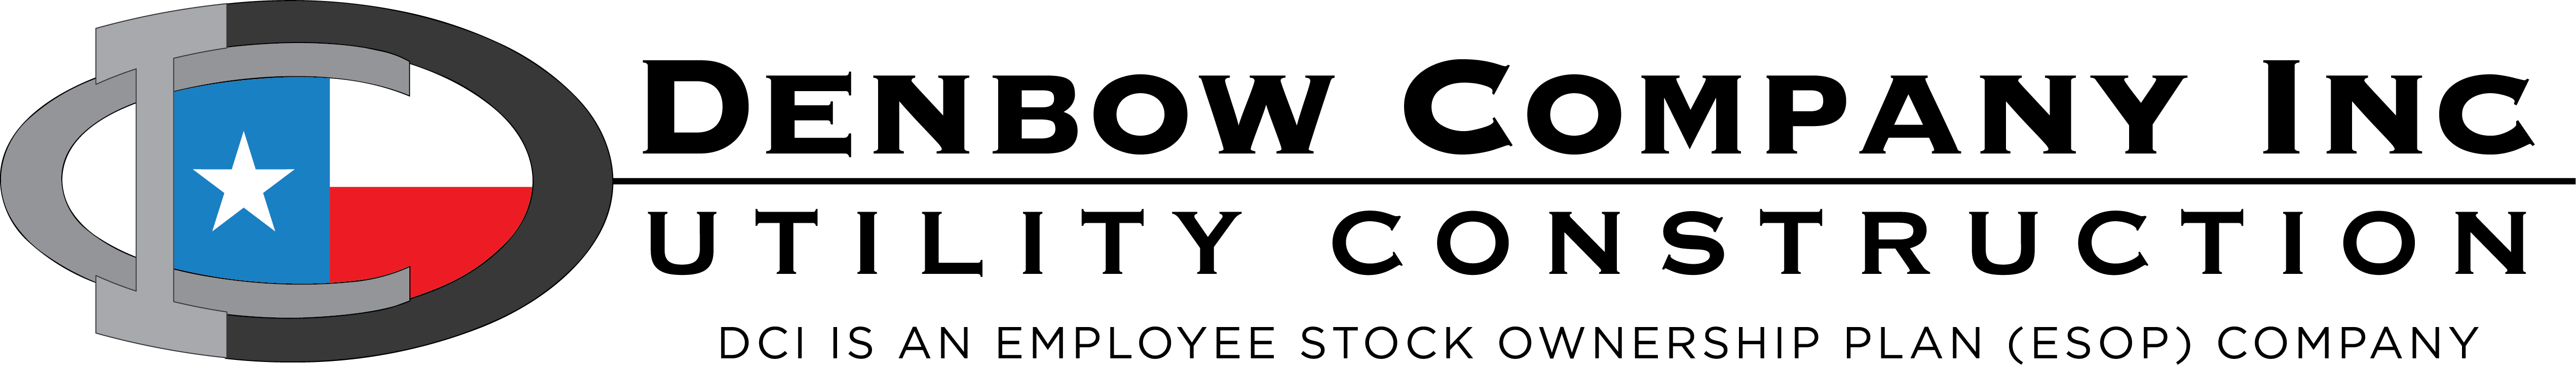 Denbow Company Inc. Logo